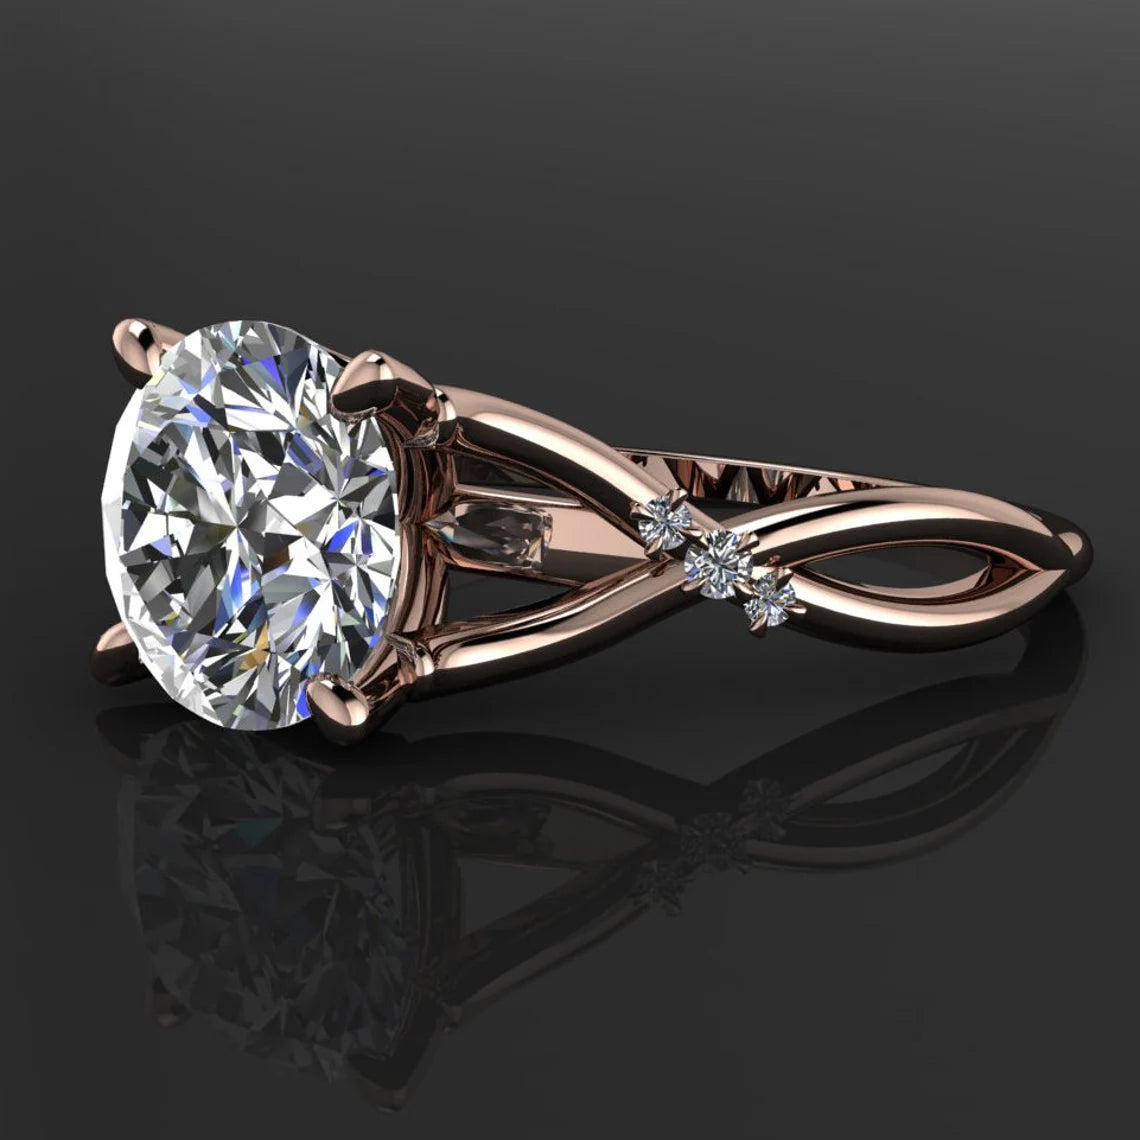 daphne ring - 1.5 carat OEC ZAYA moissanite engagement ring, infinity band - J Hollywood Designs